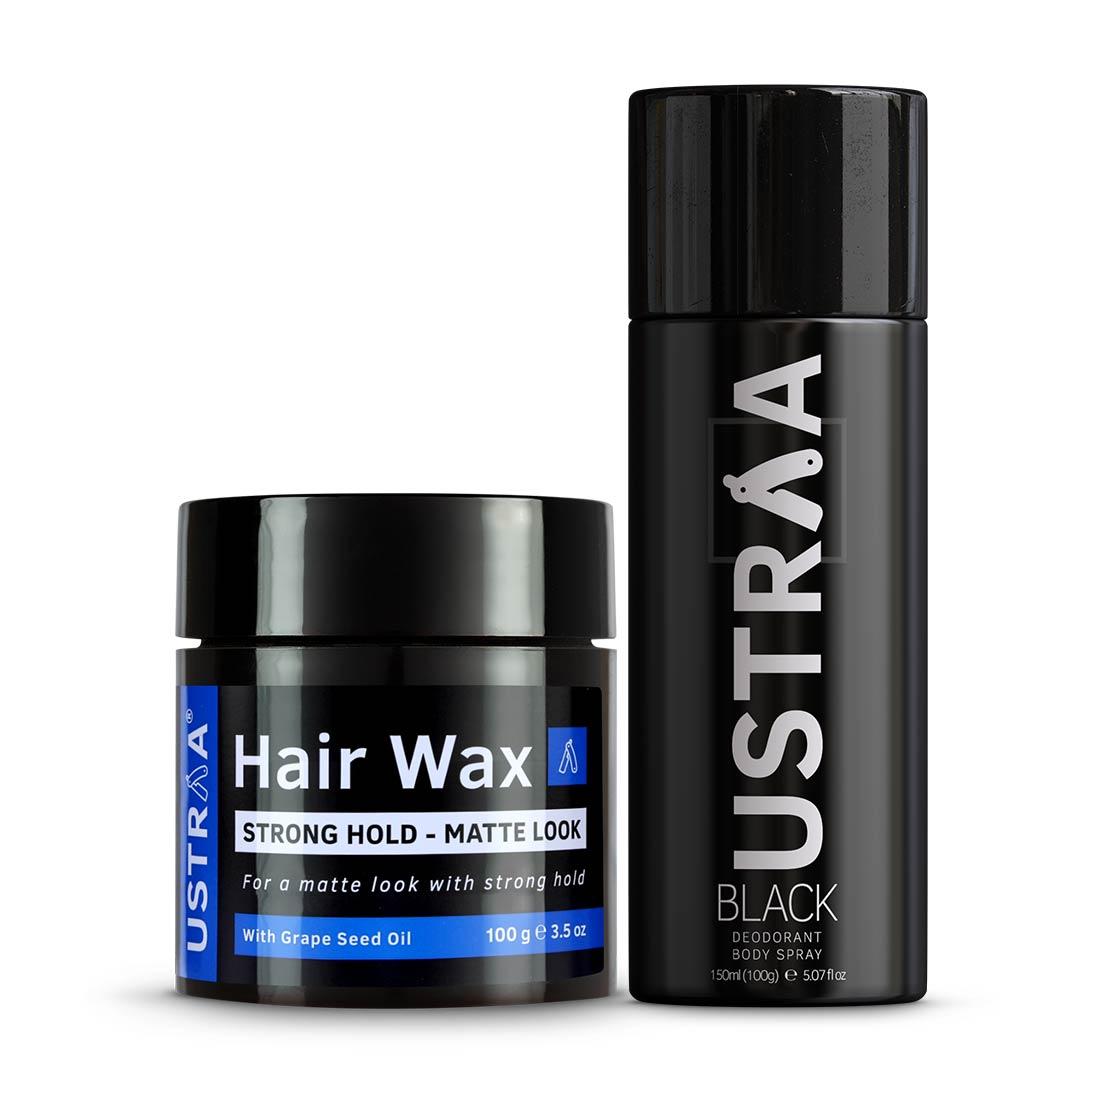 Ustraa Black Deodorant (150ml) and Hair Wax-Matte Look (100g) For Men